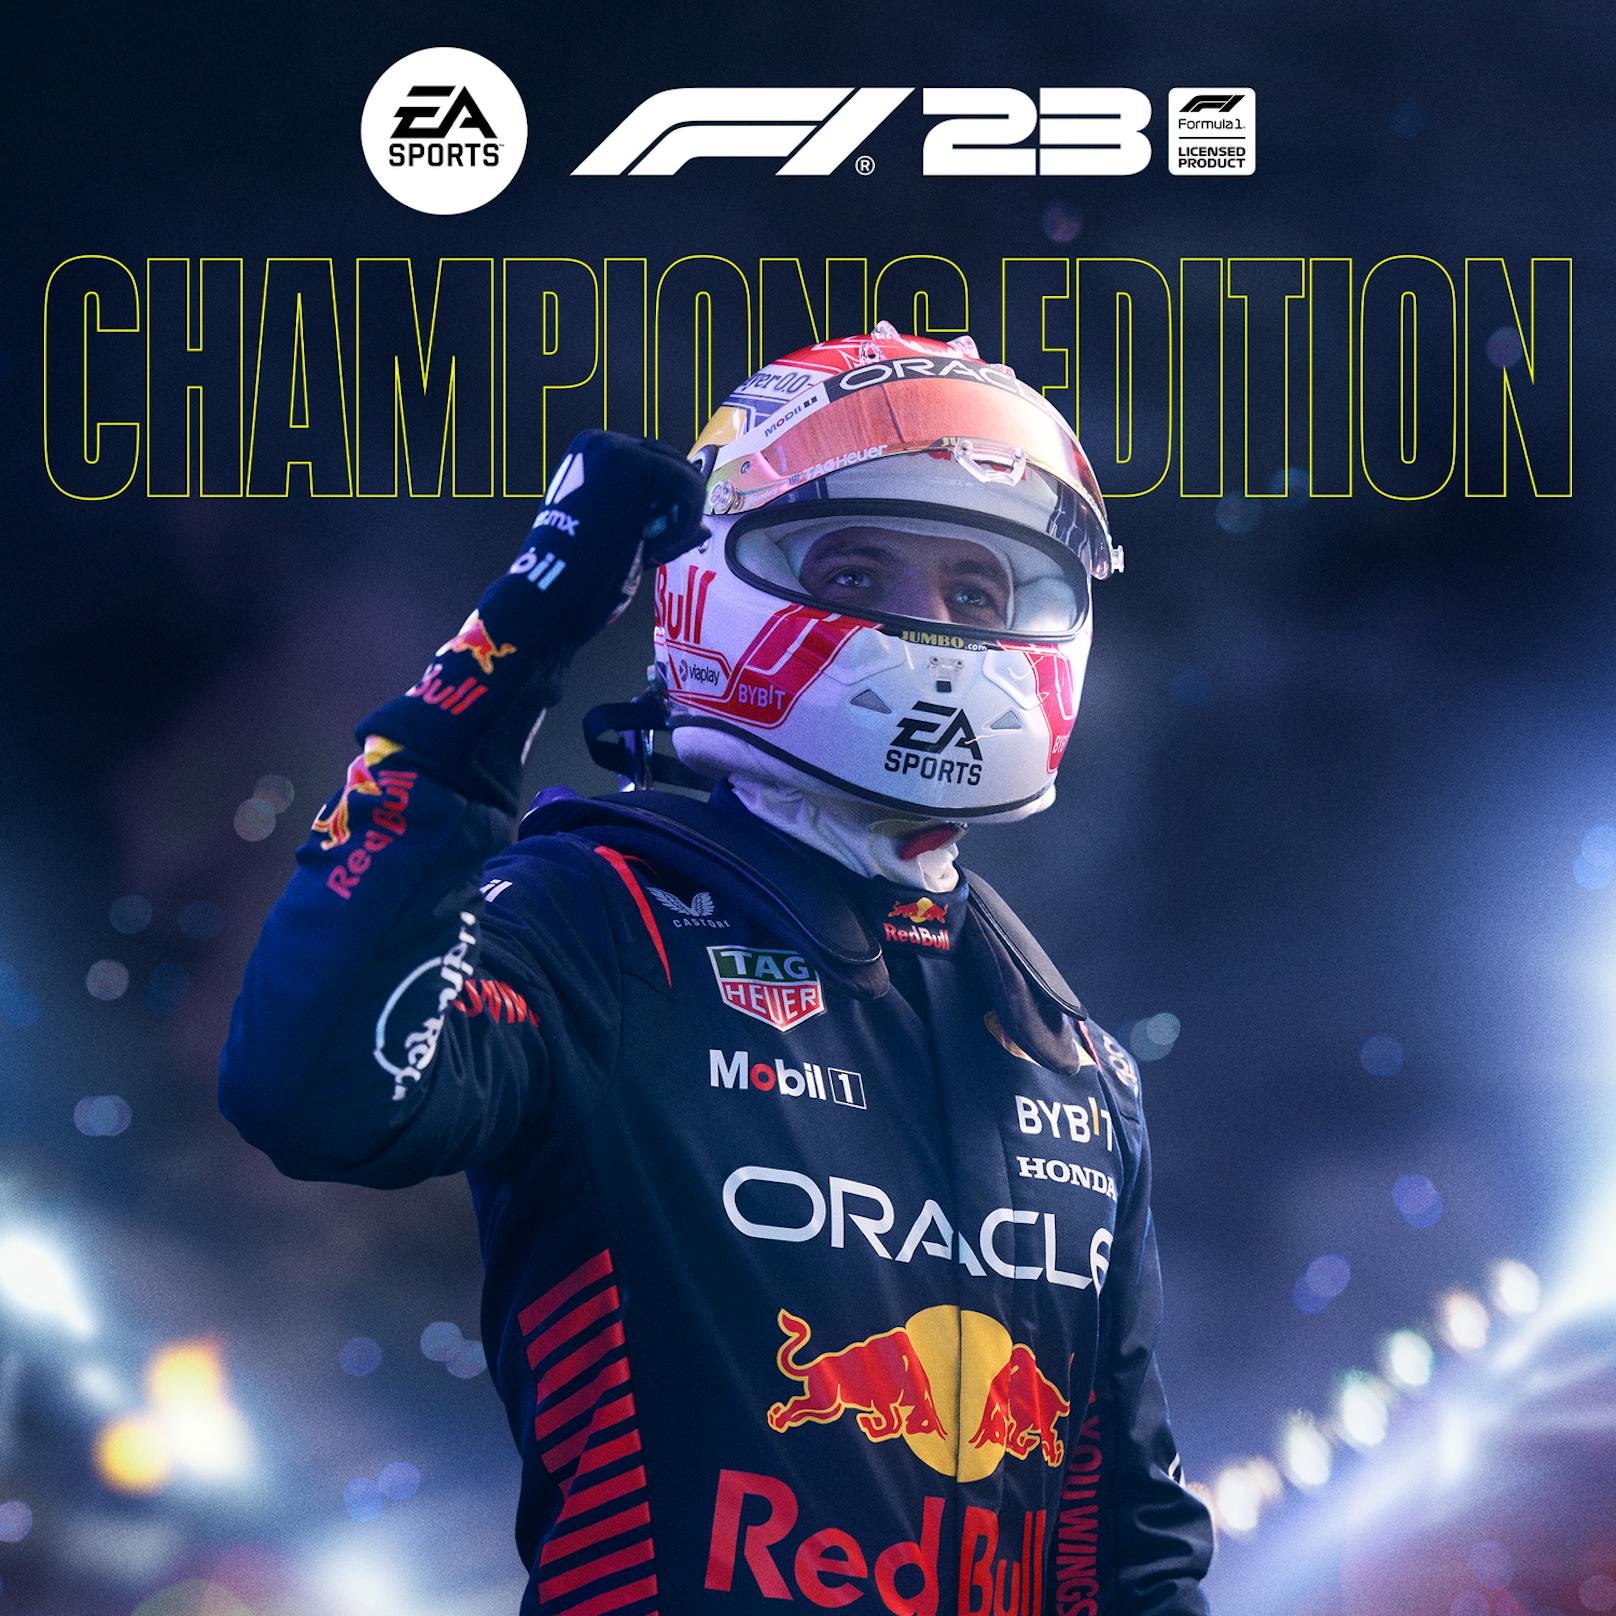 "EA SPORTS F1 23" | Cover Reveal.